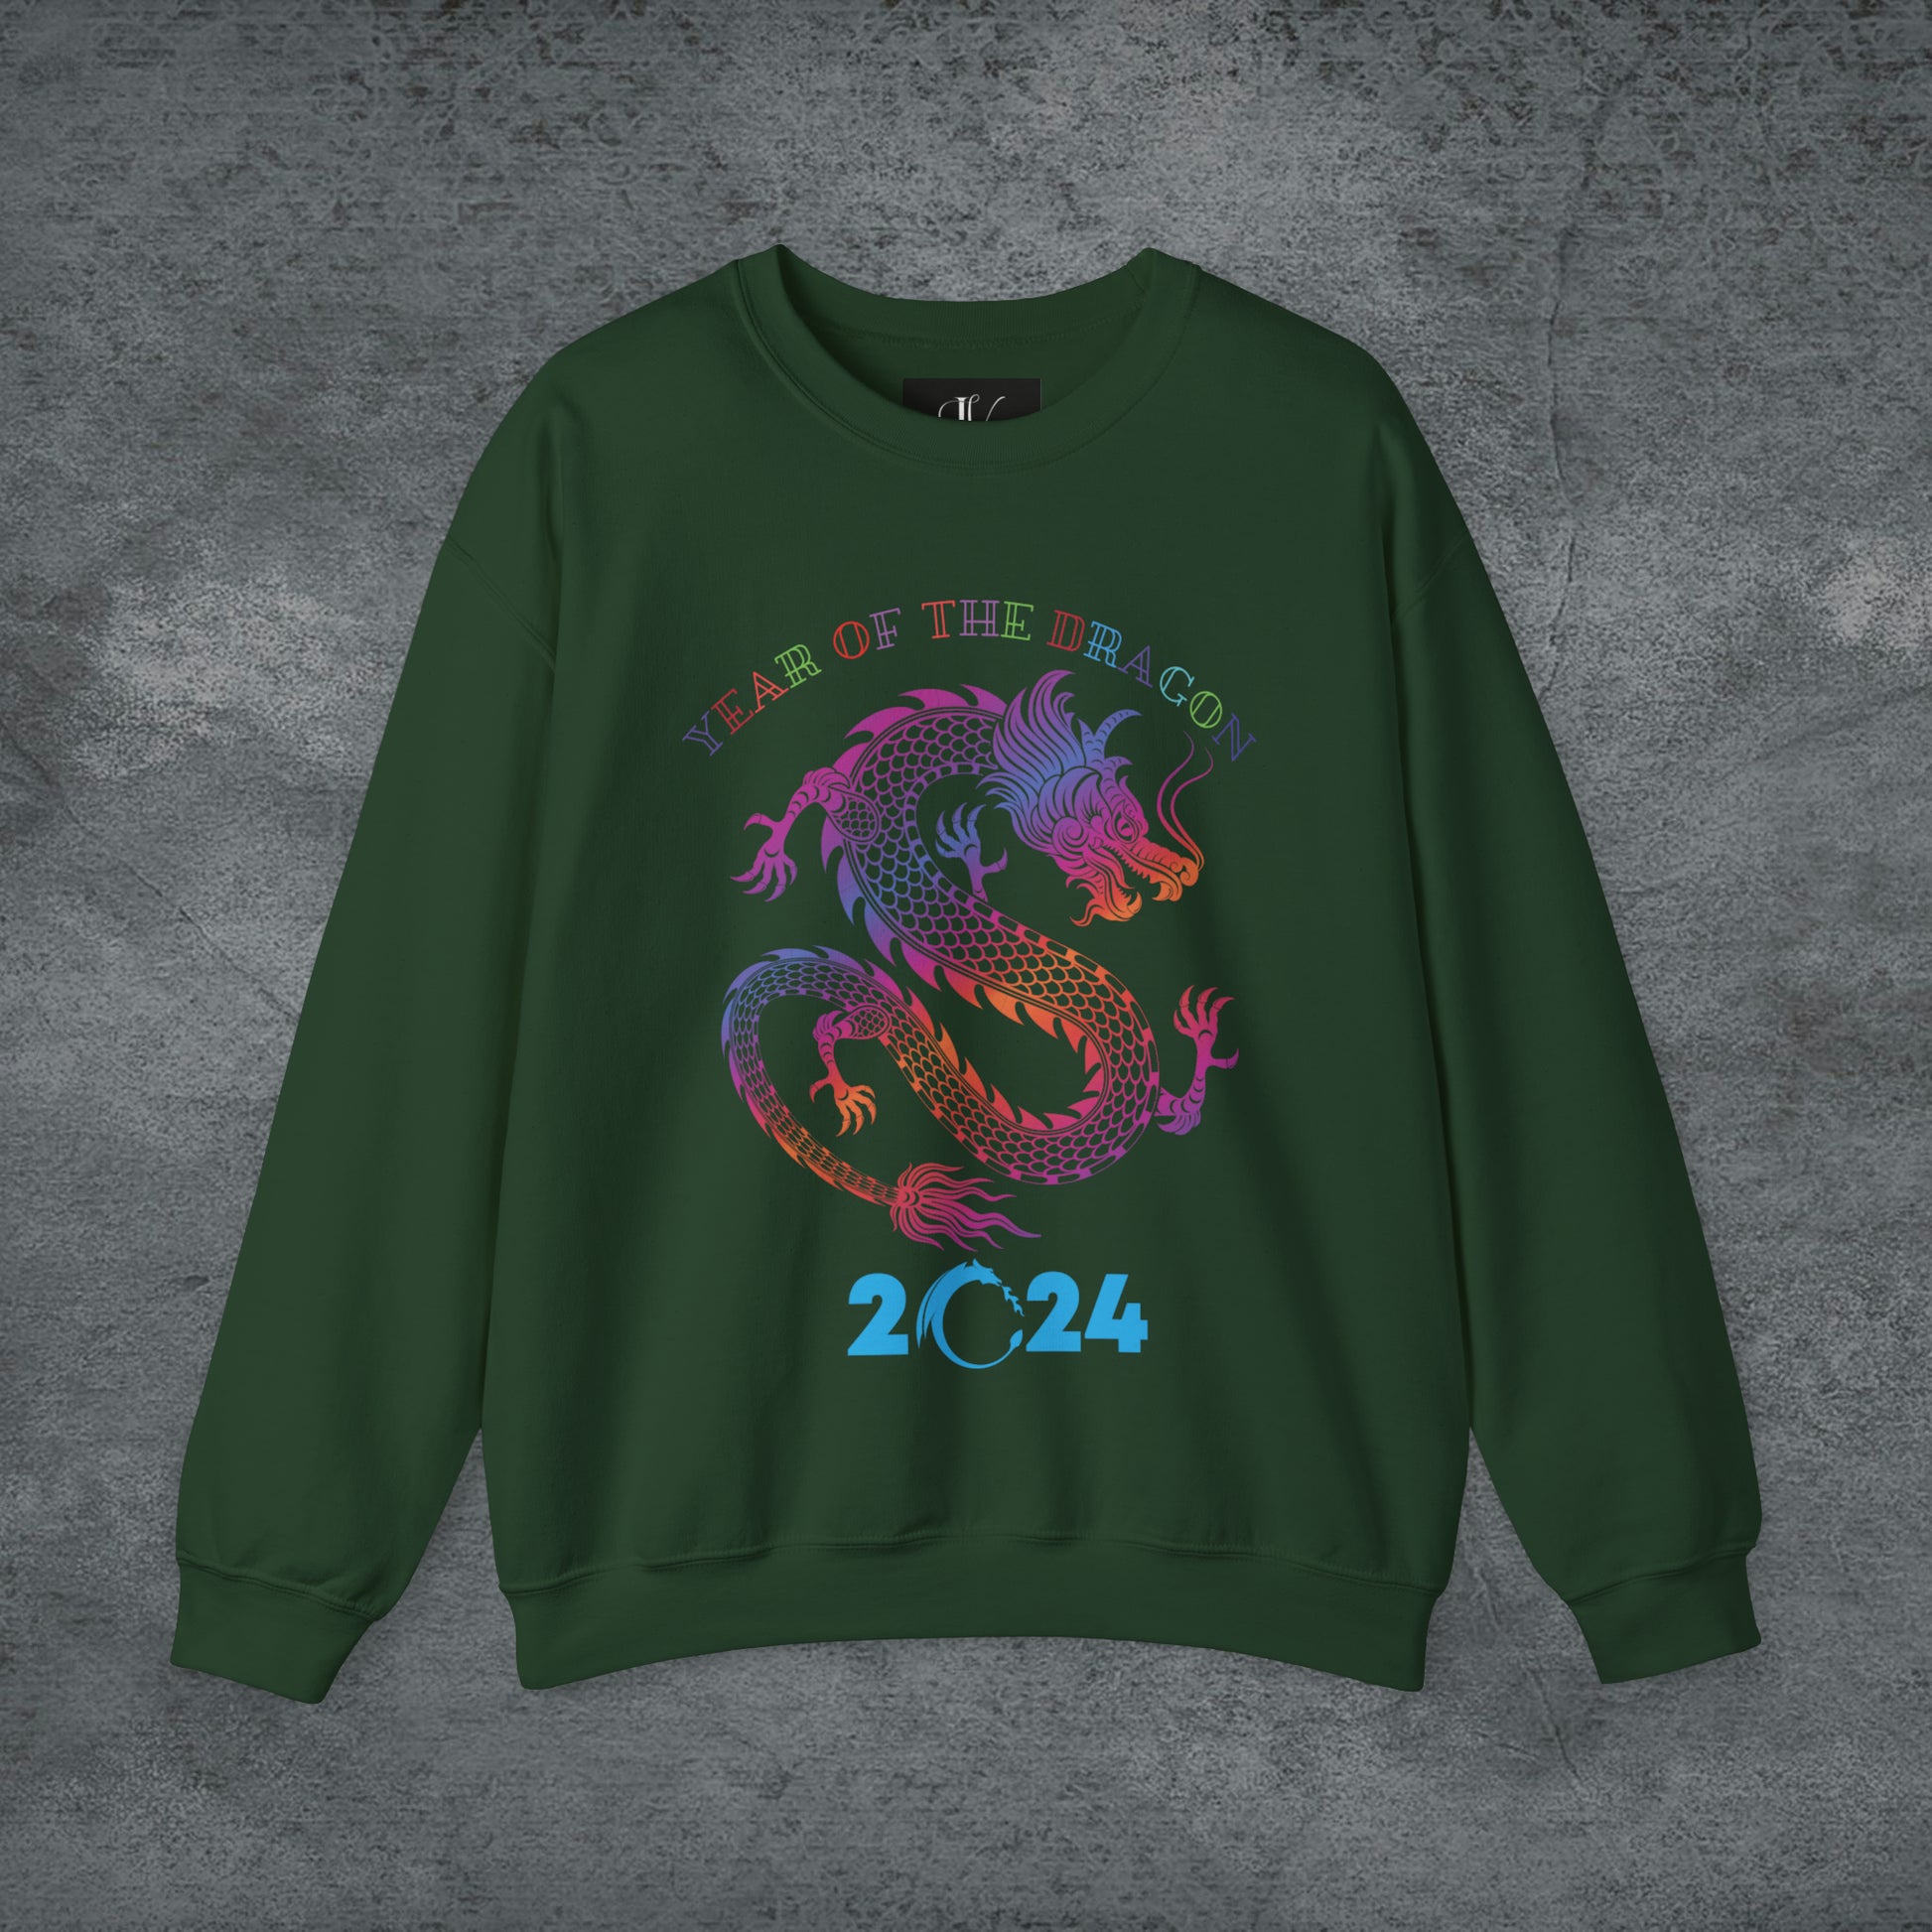 Year of the Dragon Sweatshirt - 2024 Chinese Zodiac Shirt for Lunar New Year Celebrations Sweatshirt S Forest Green 